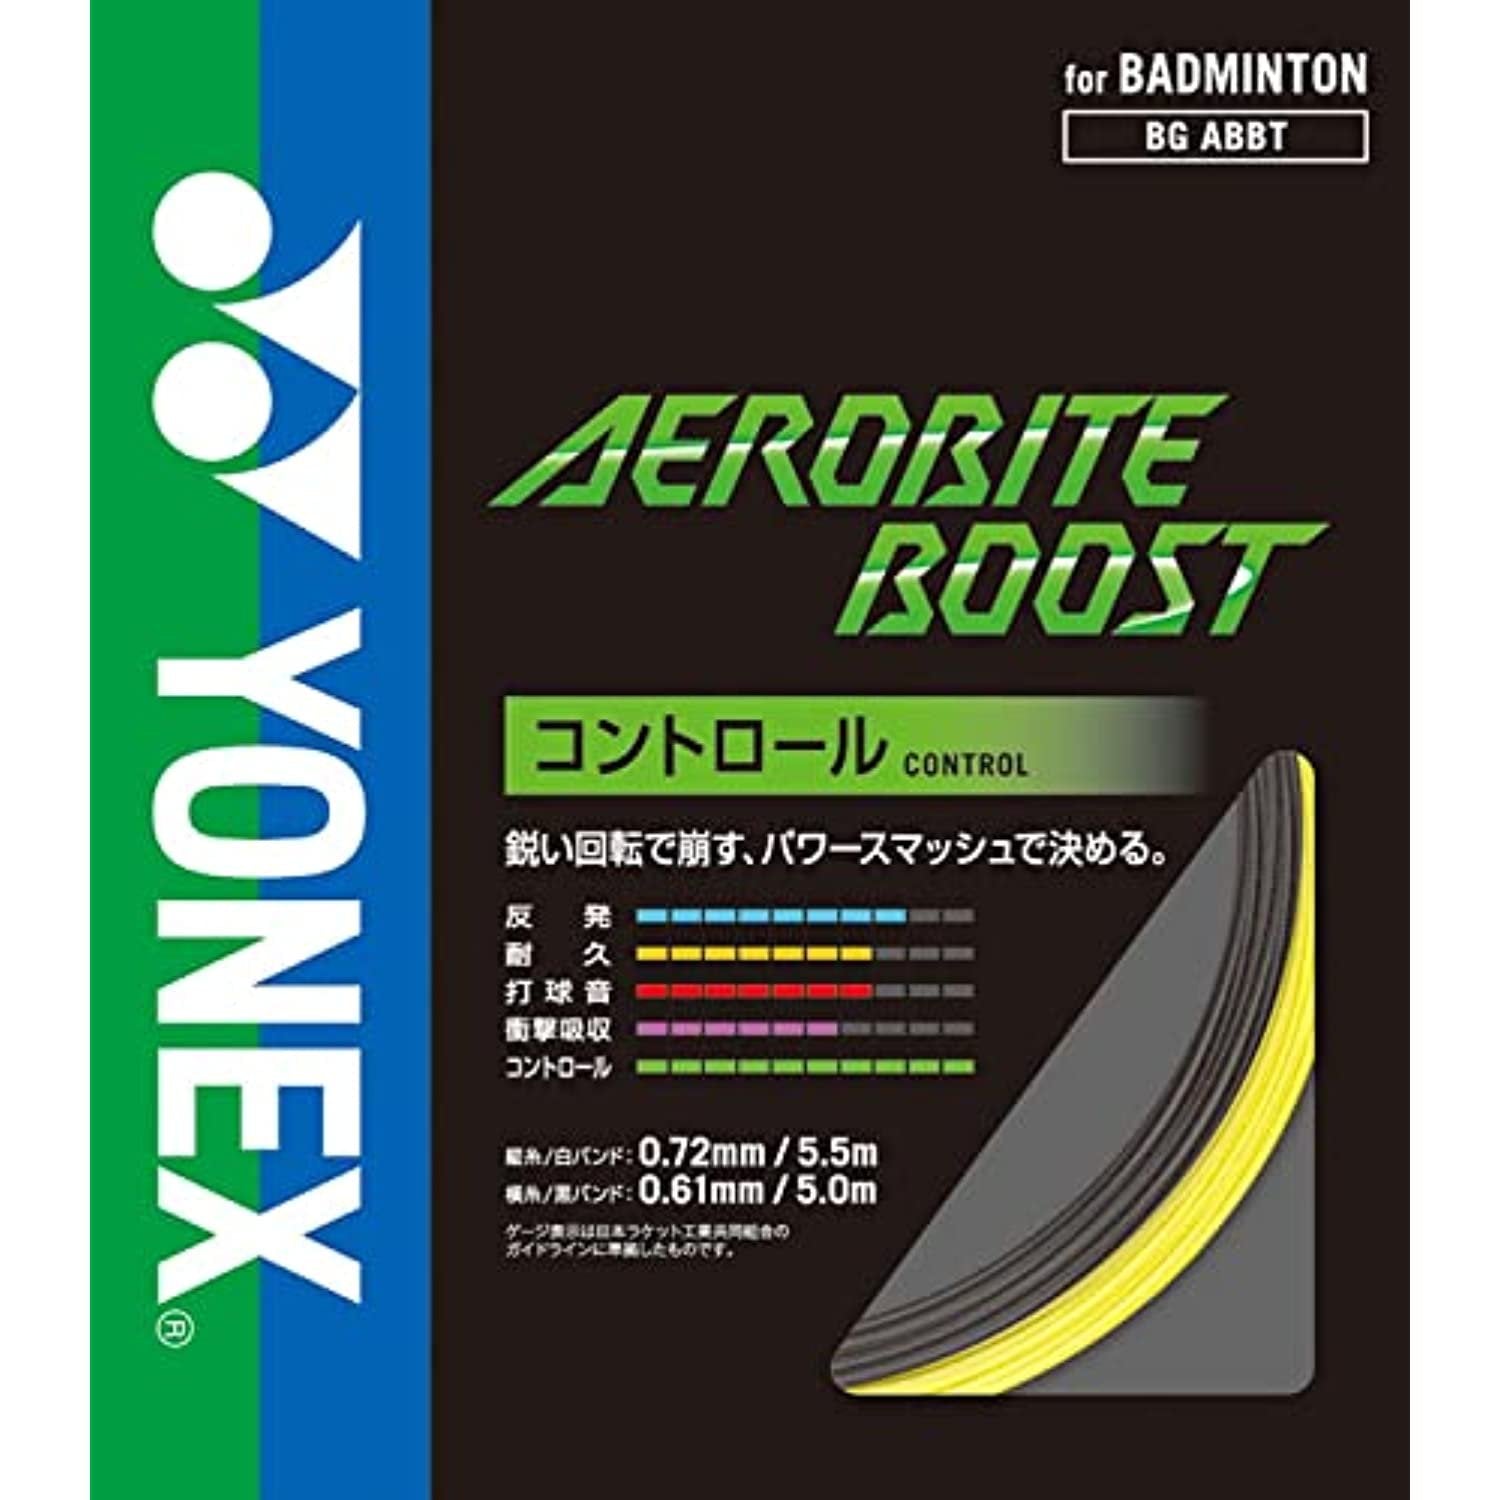 YONEX BG Aerobite Boost Badminton String